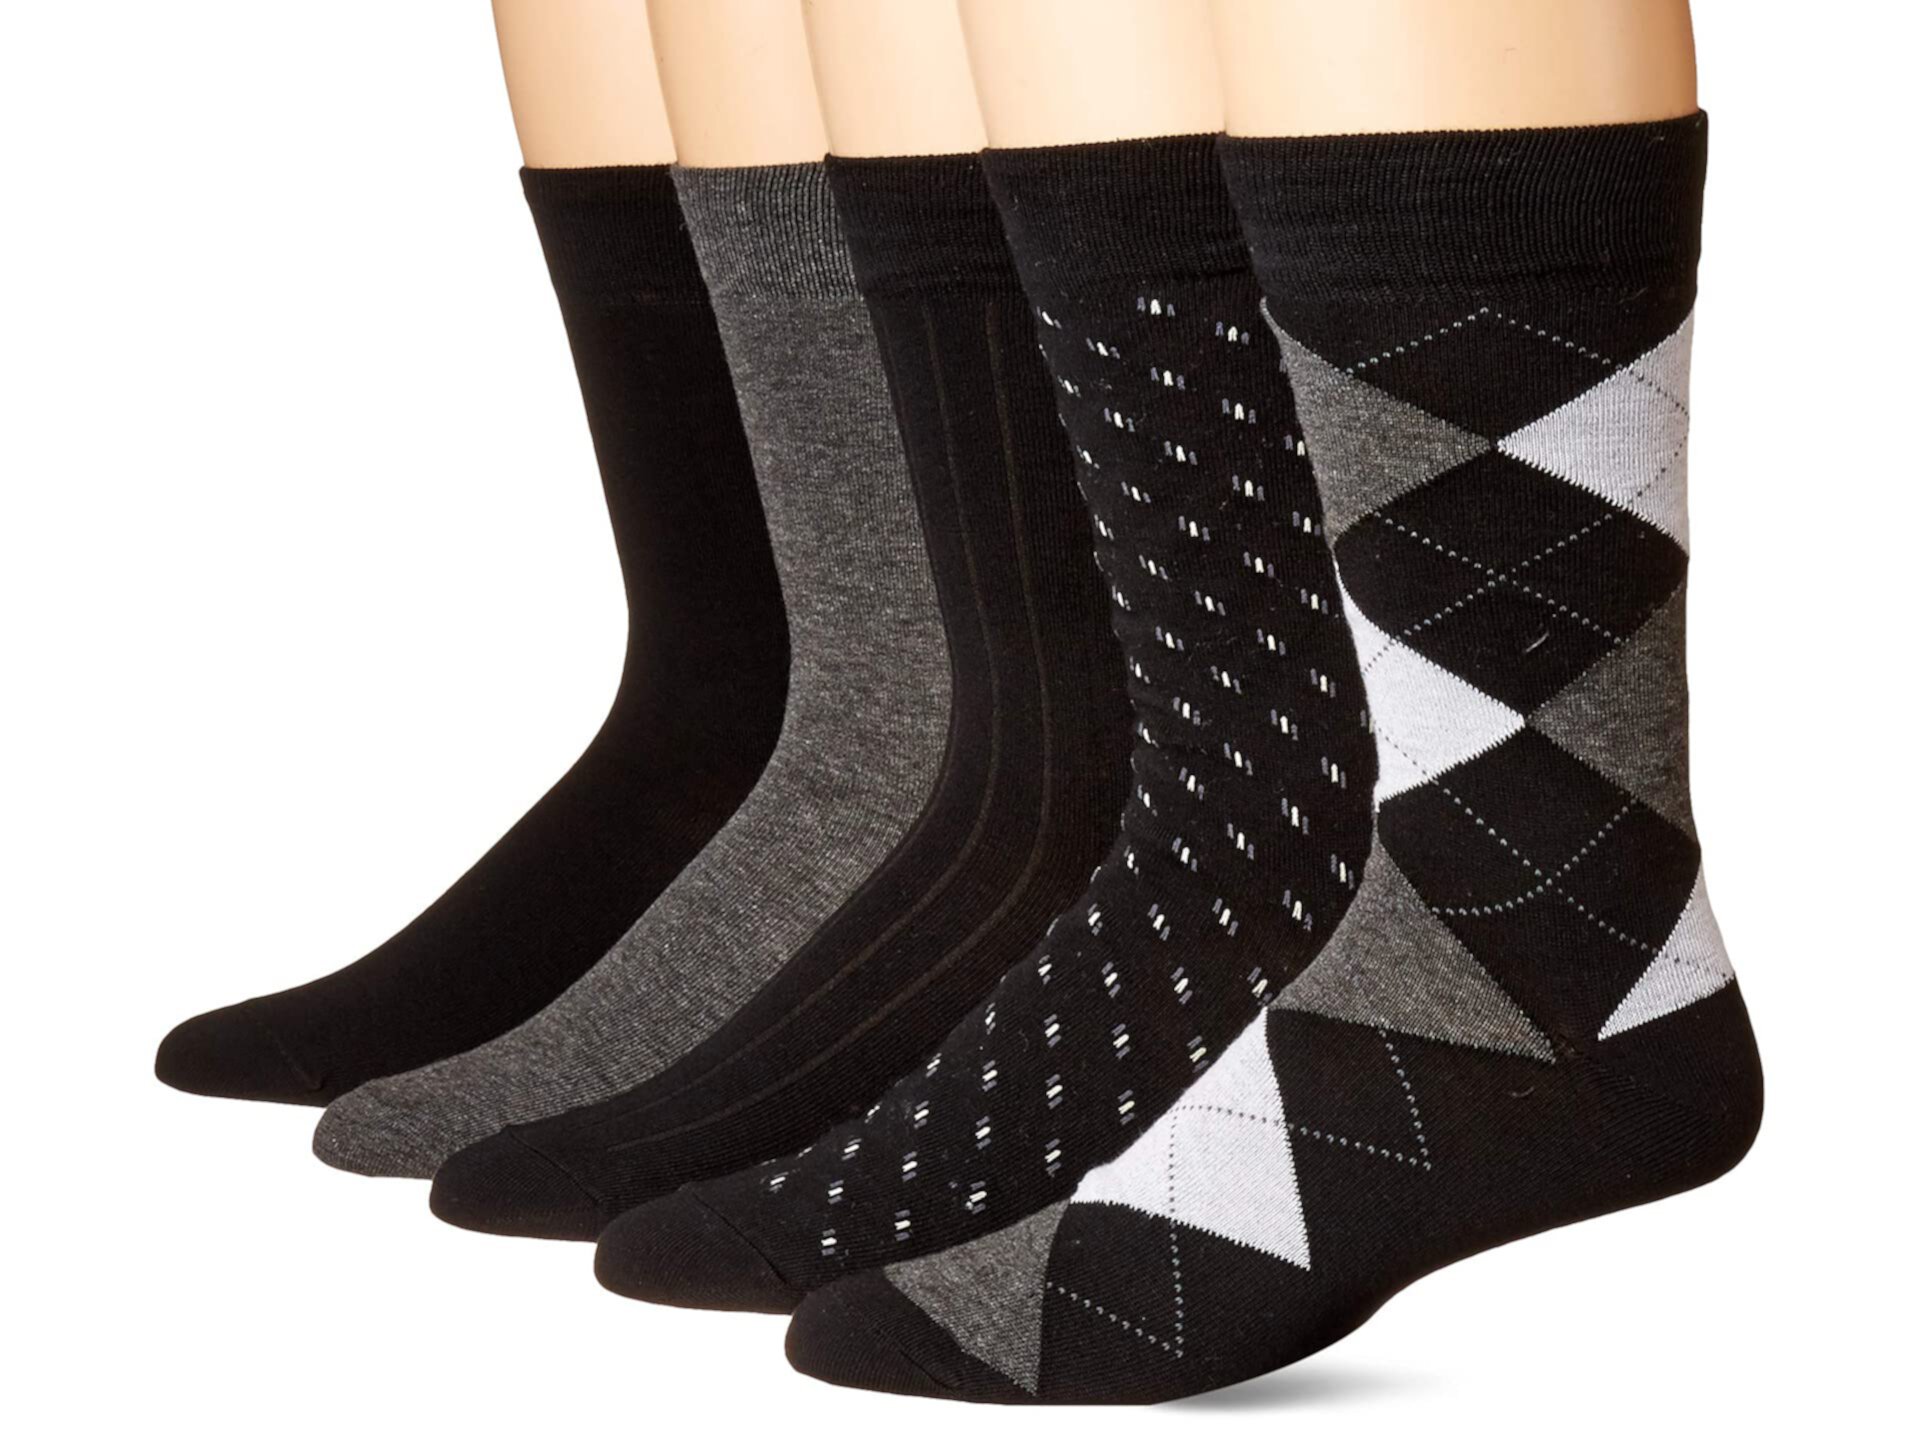 Мужские носки для мужчин, набор из 5 пар в ассортименте KM Legend